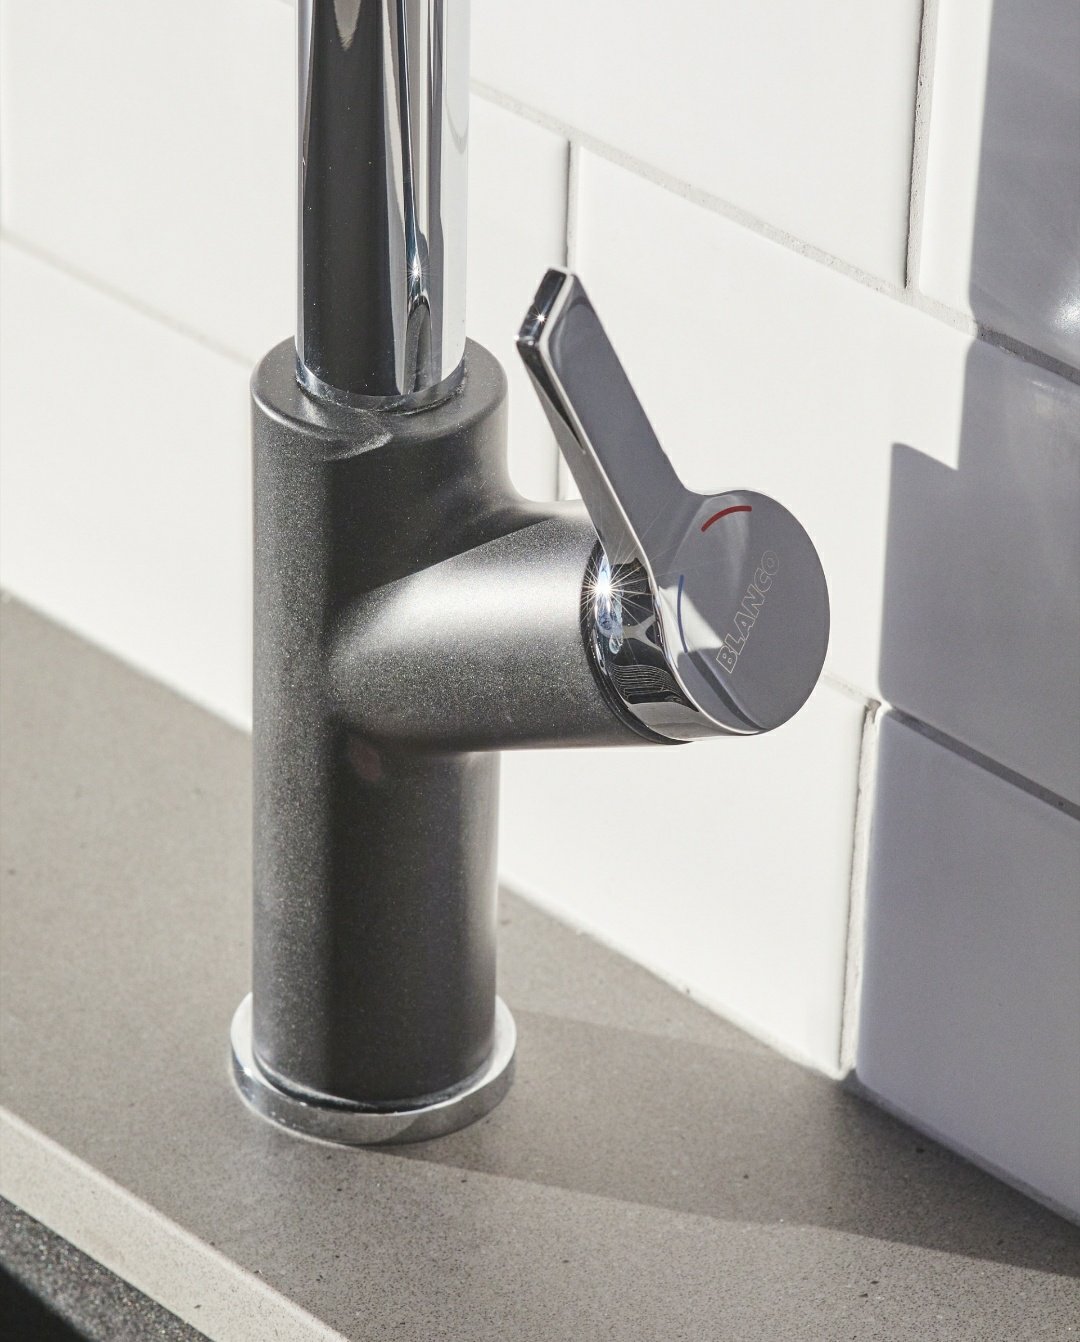 BLANCO faucet details for the URBENA faucet.